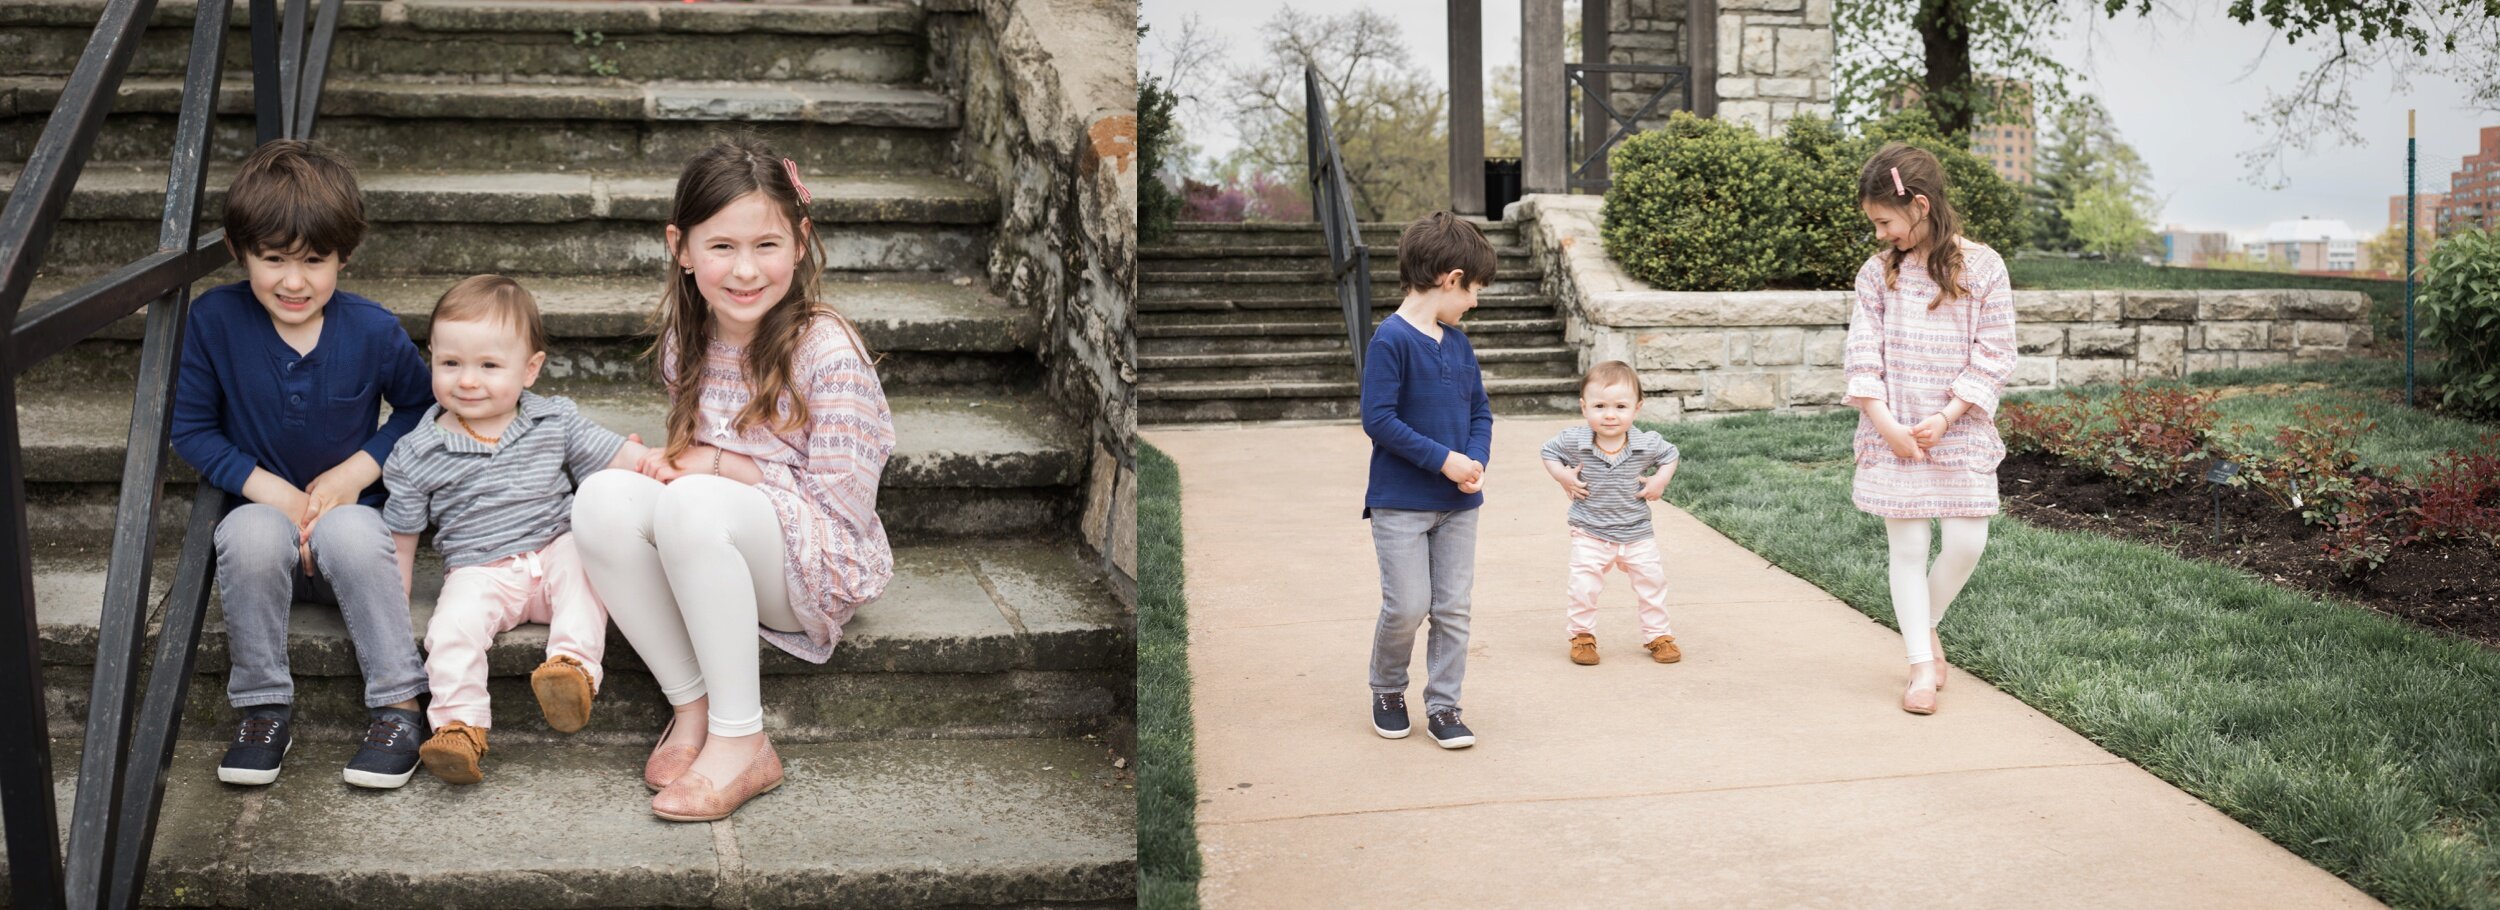 Spring Family Photos at Loose Park in Kansas City - 16